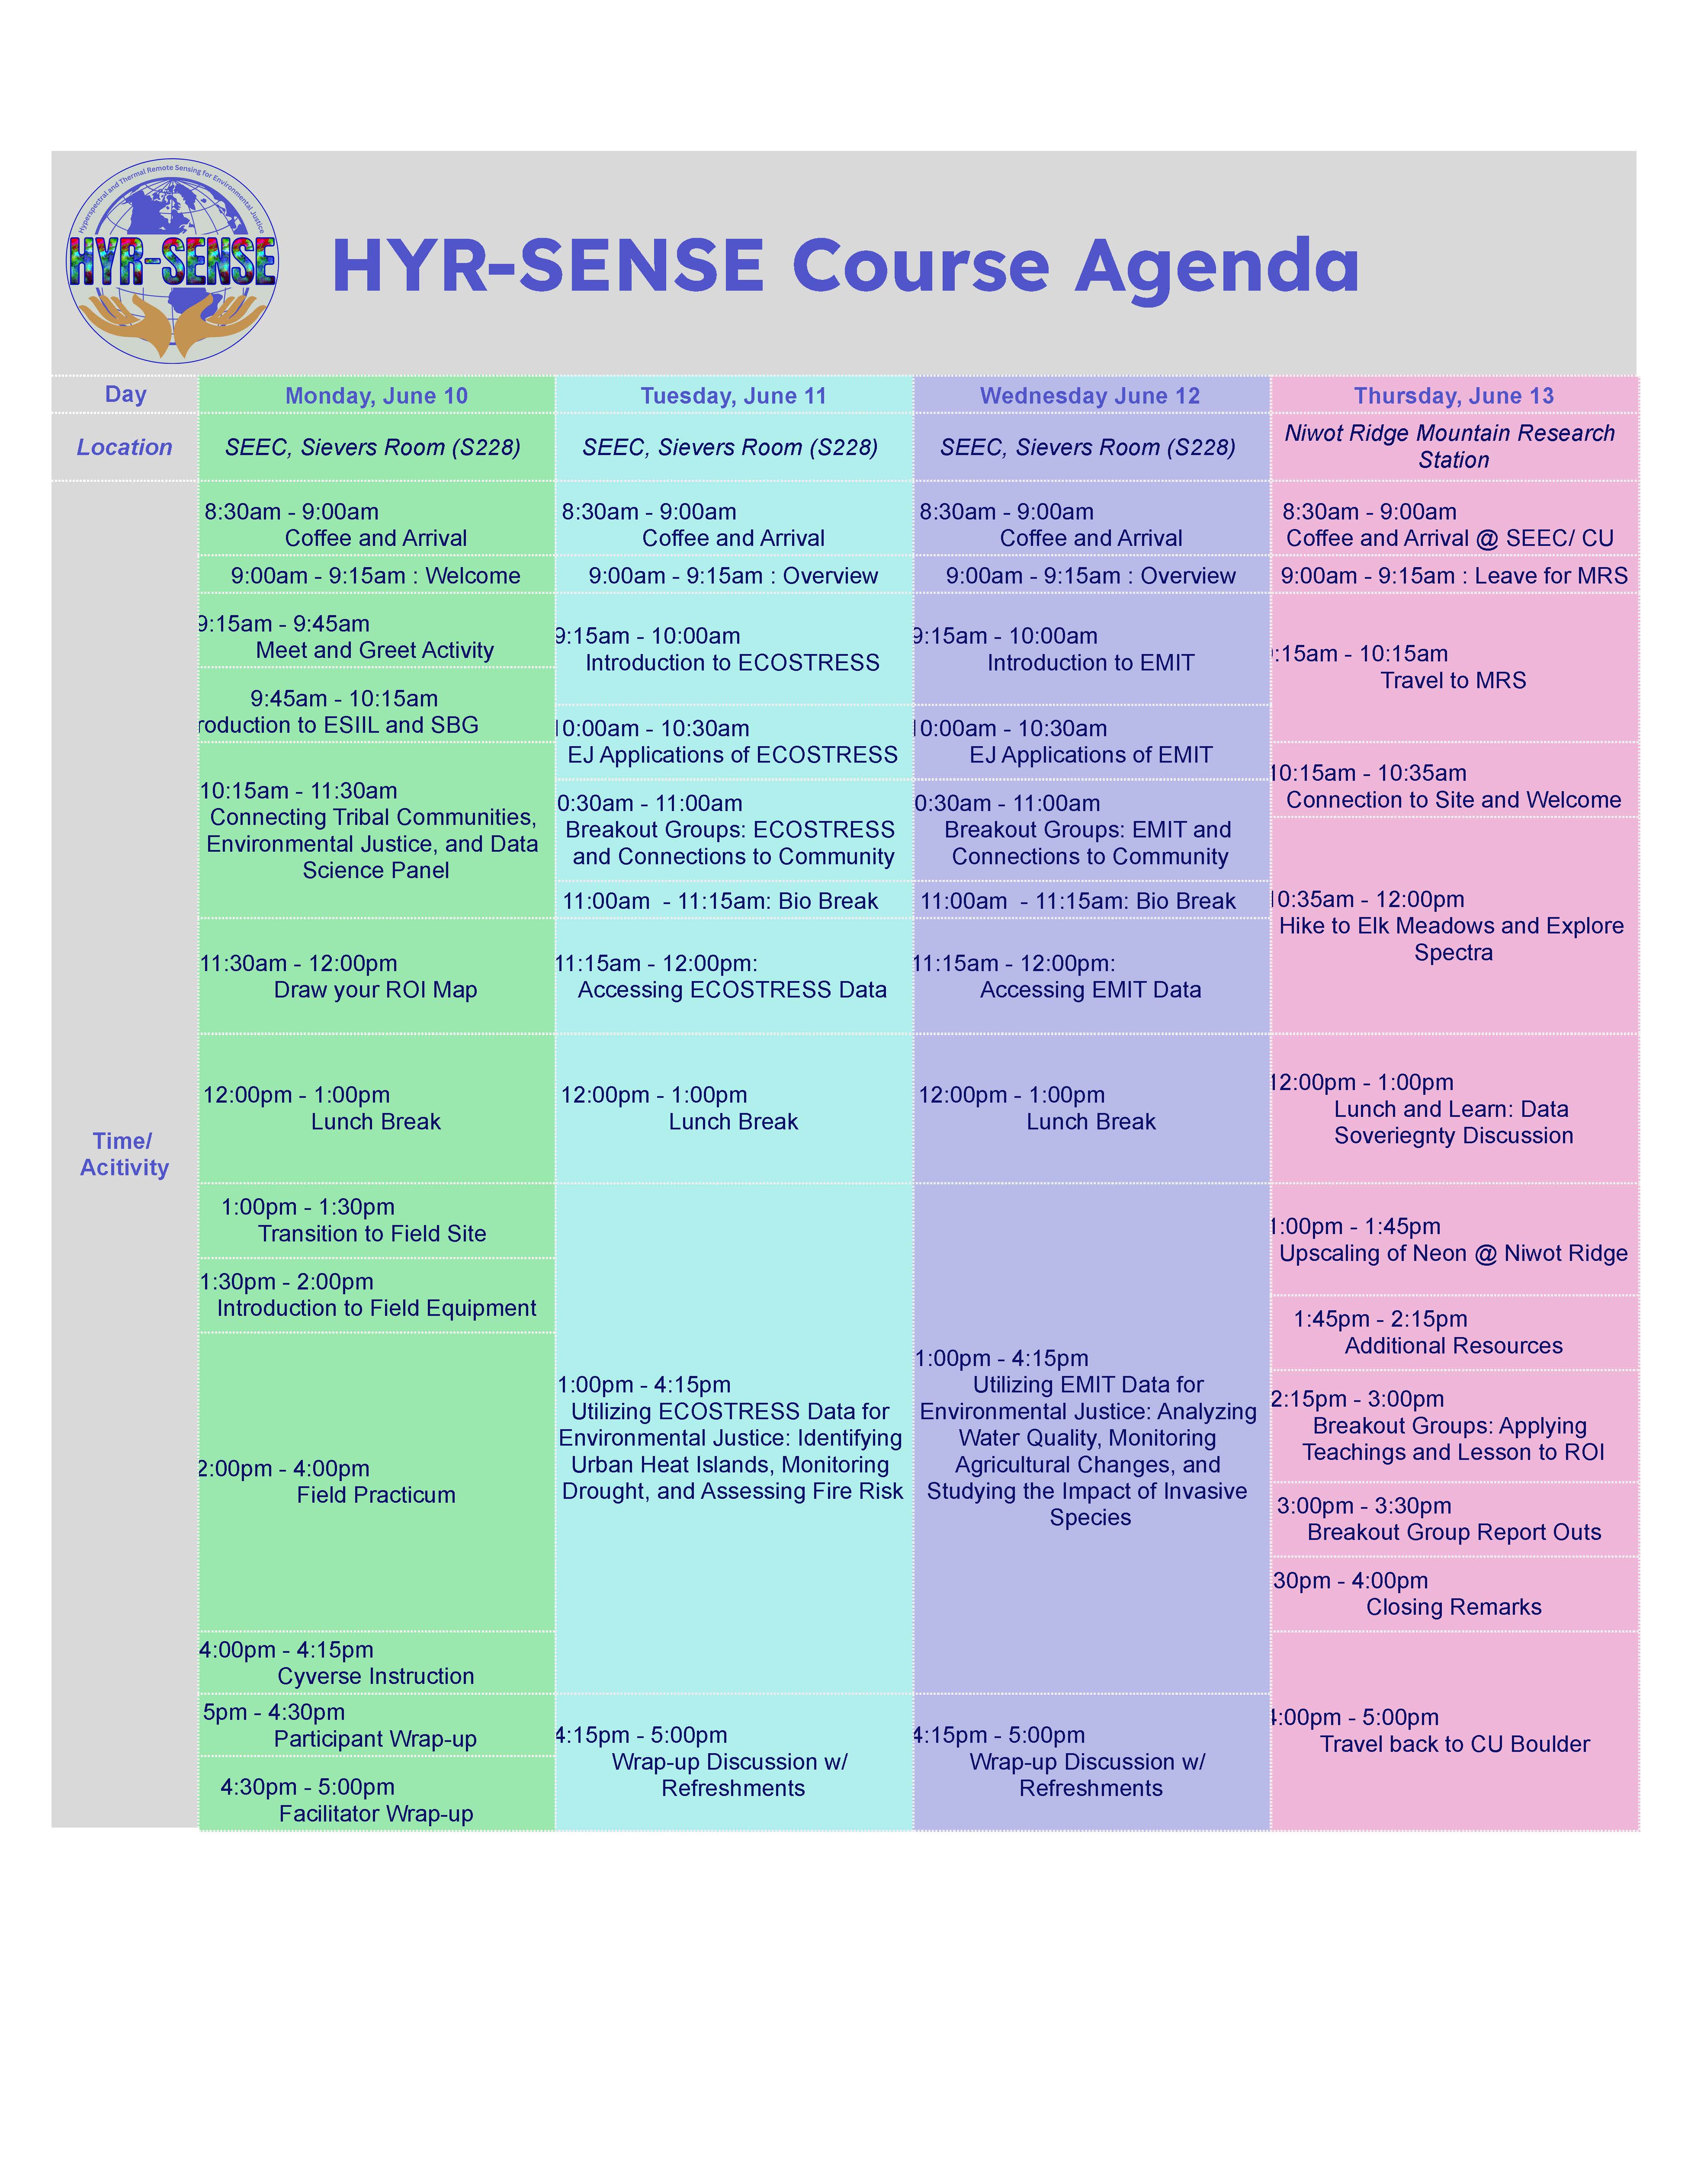 HYR-SENSE Agenda